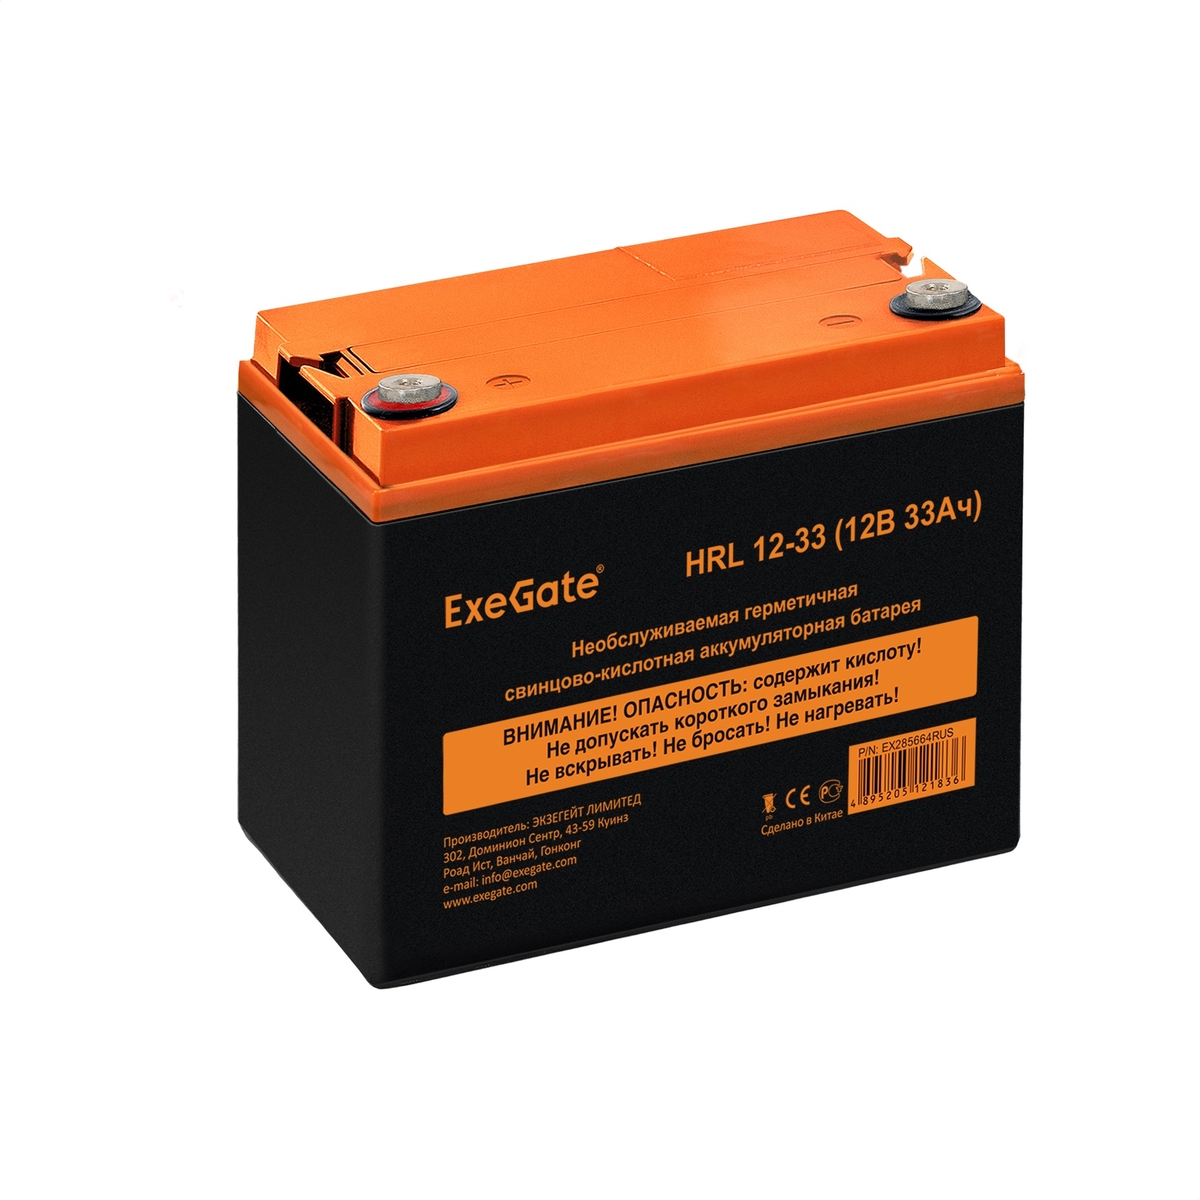 UPS set EX295998 + battery 33Ah EX285664 2 piece